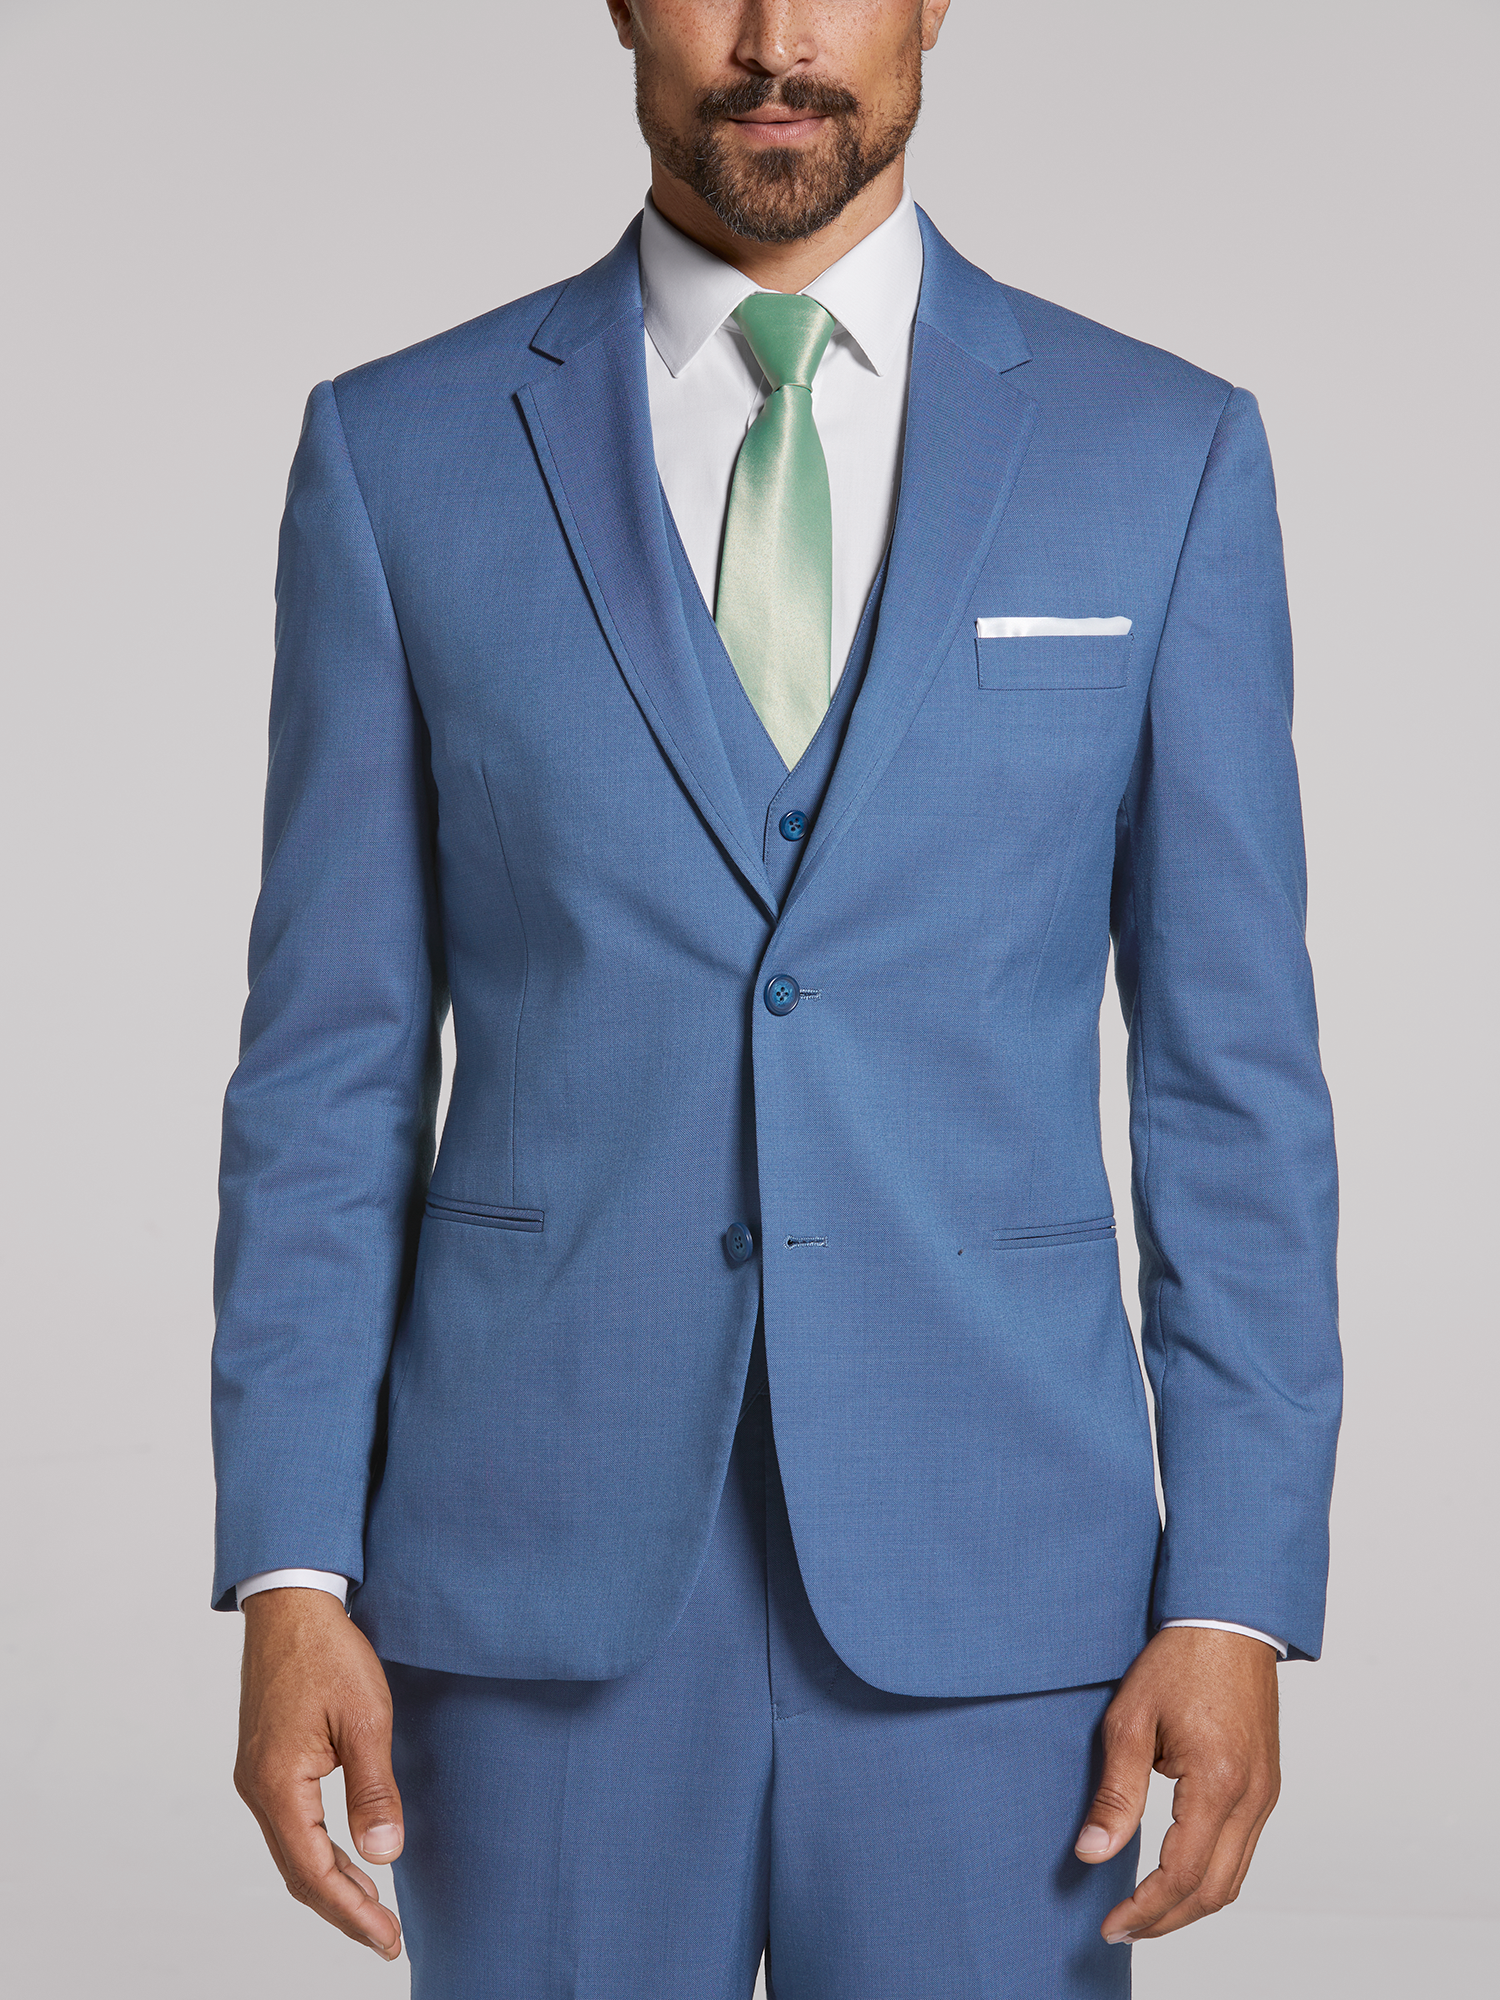 Michael Kors Blue Performance Wedding Suit Rental